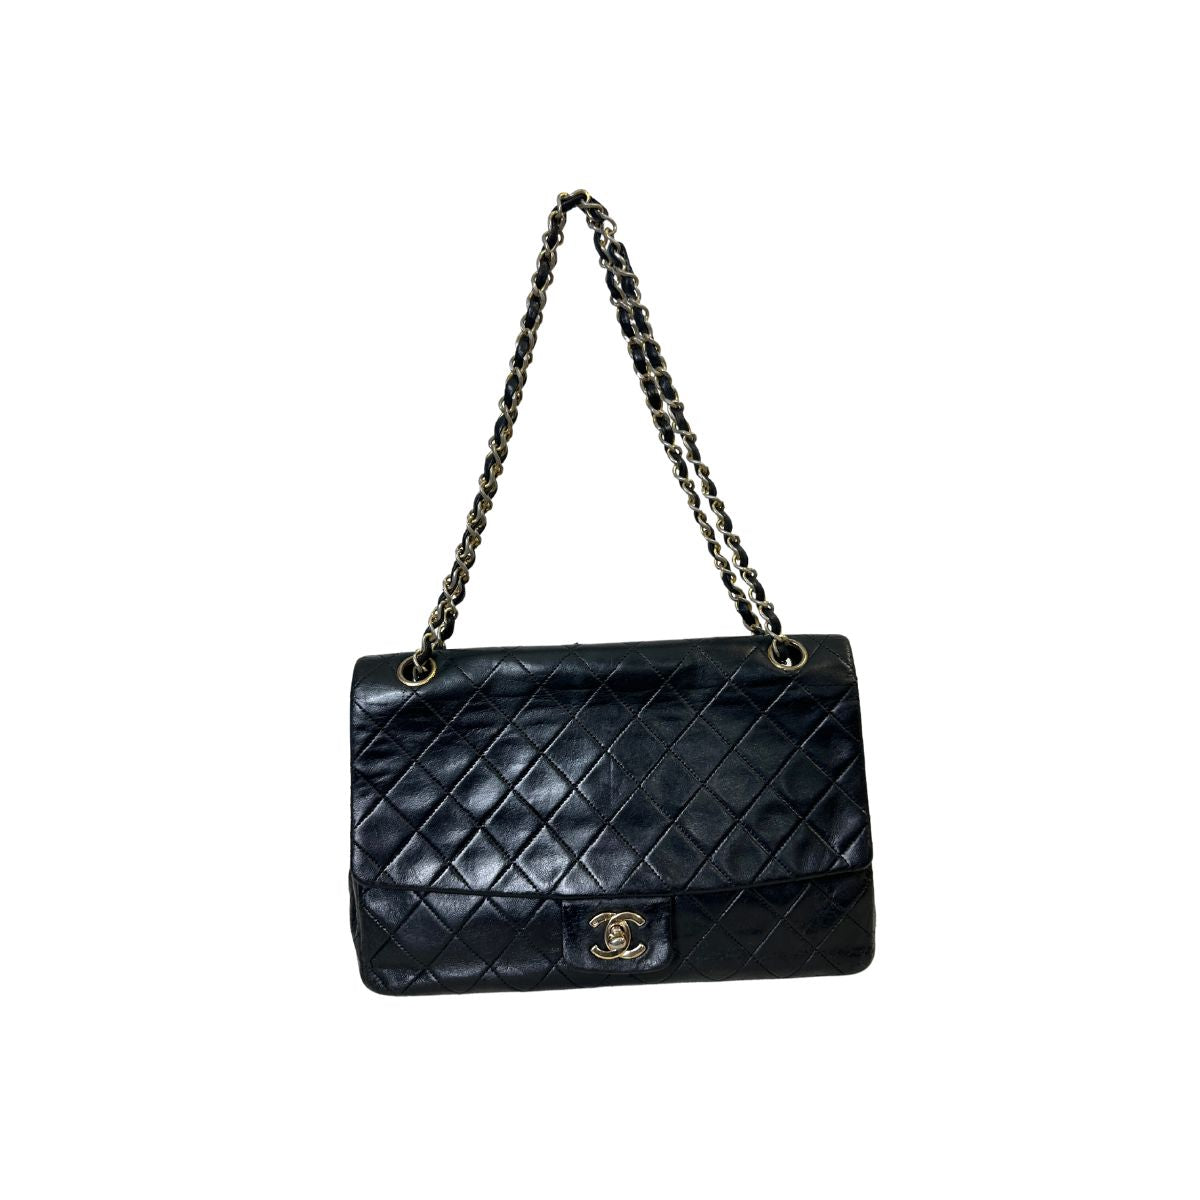 Chanel Chanel Medium Classic Flapbag - Shoulder bag - Etoile Luxury Vintage